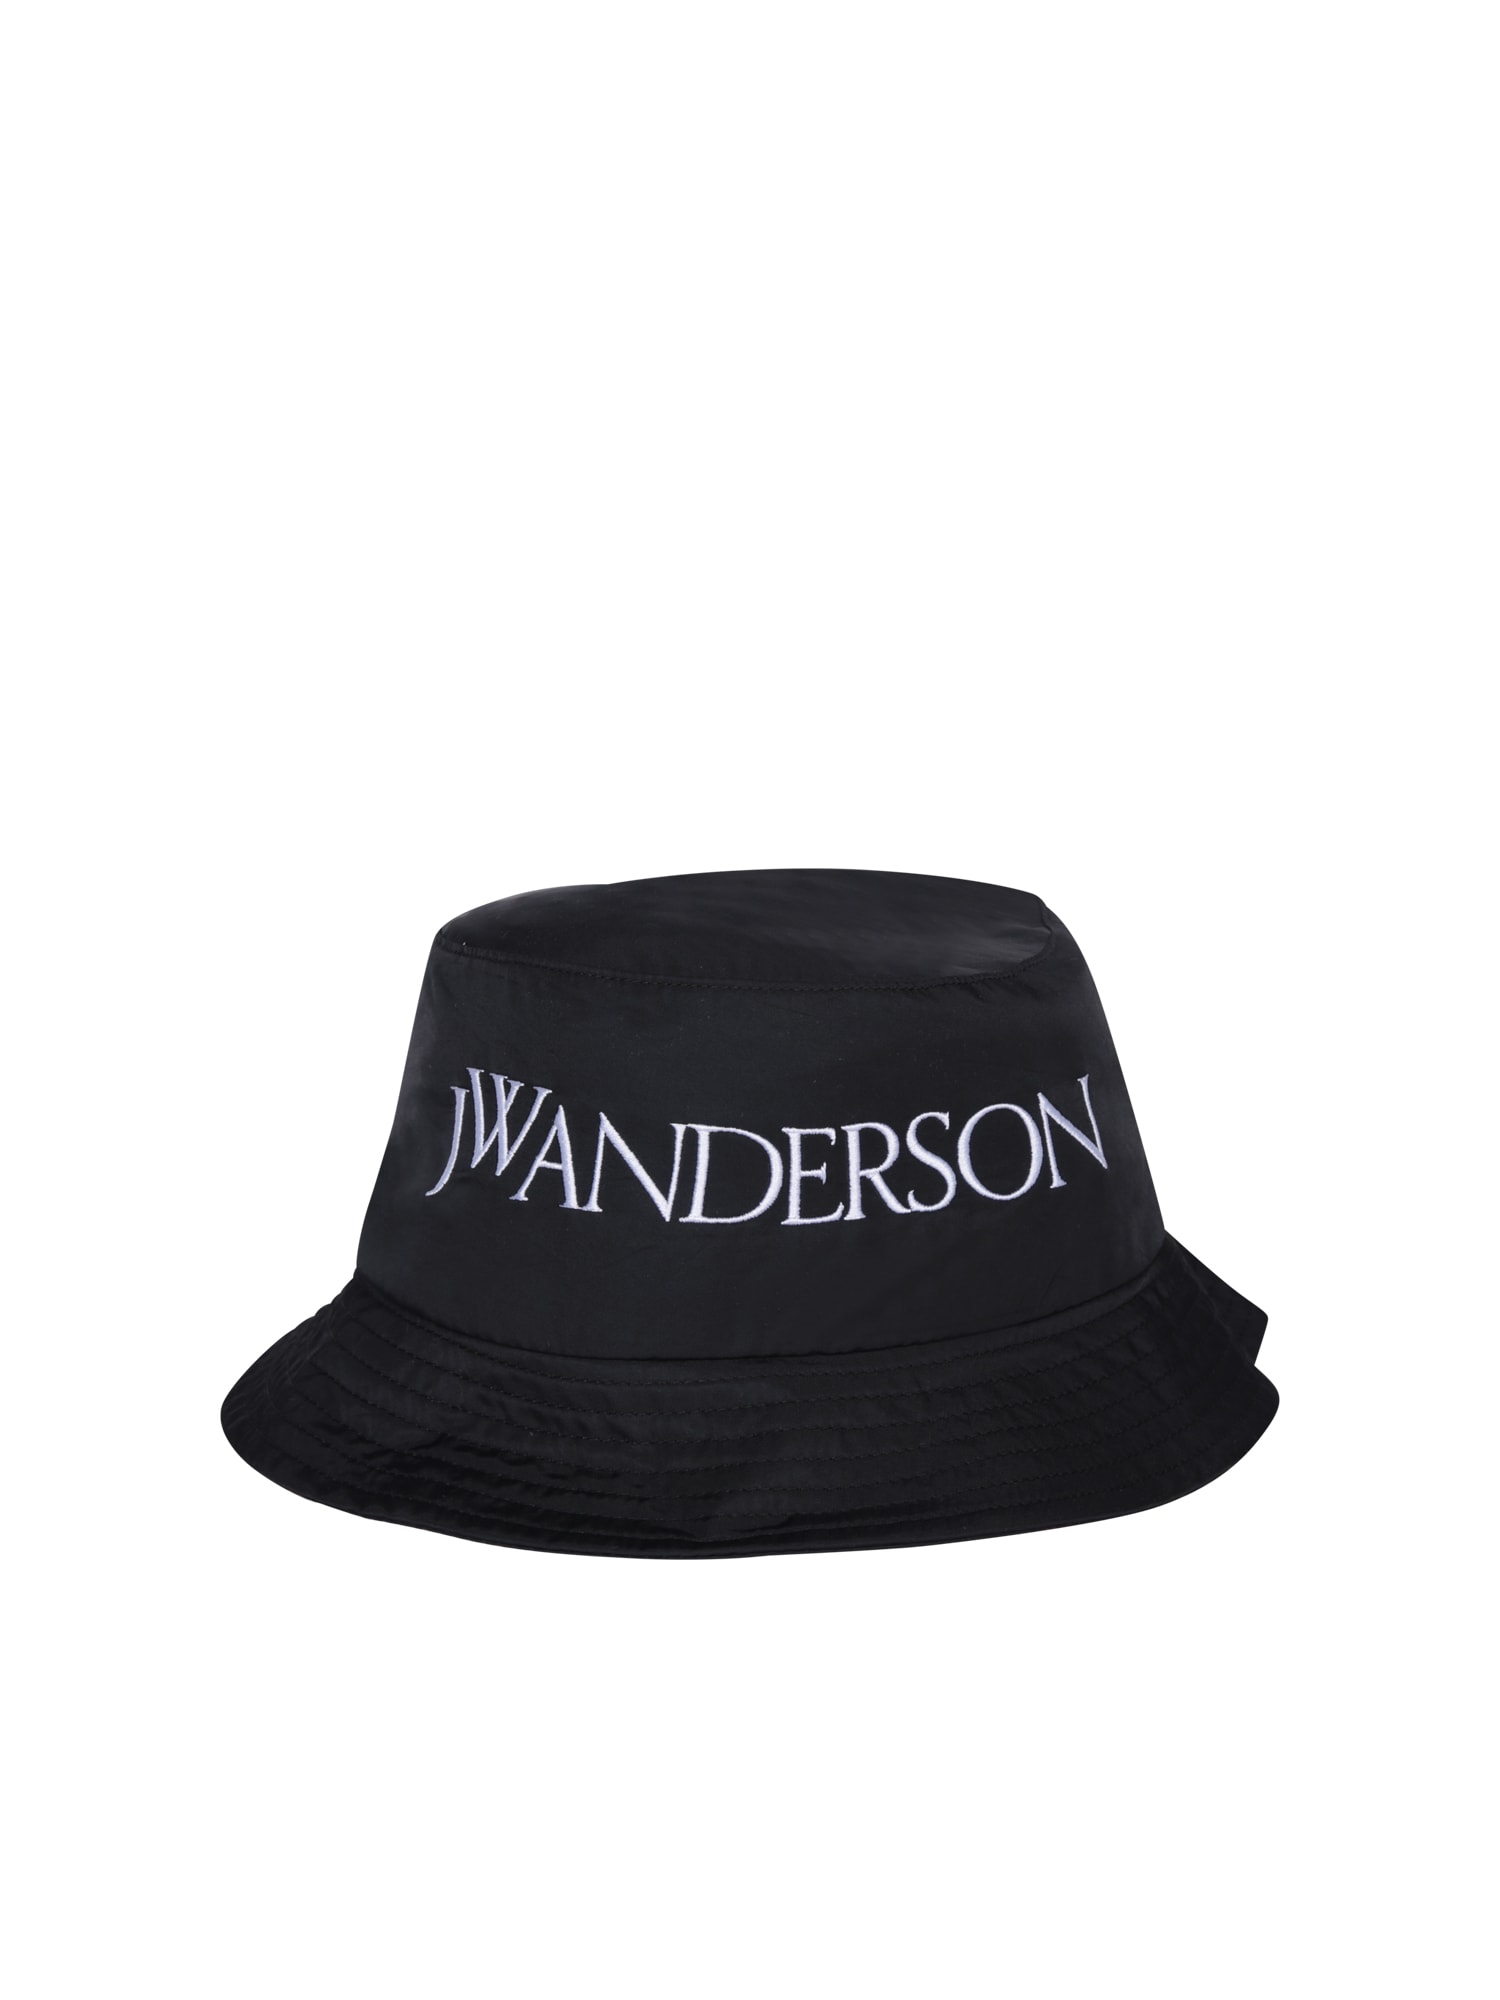 J.W. Anderson Black Nylon Blend Bucket Hat